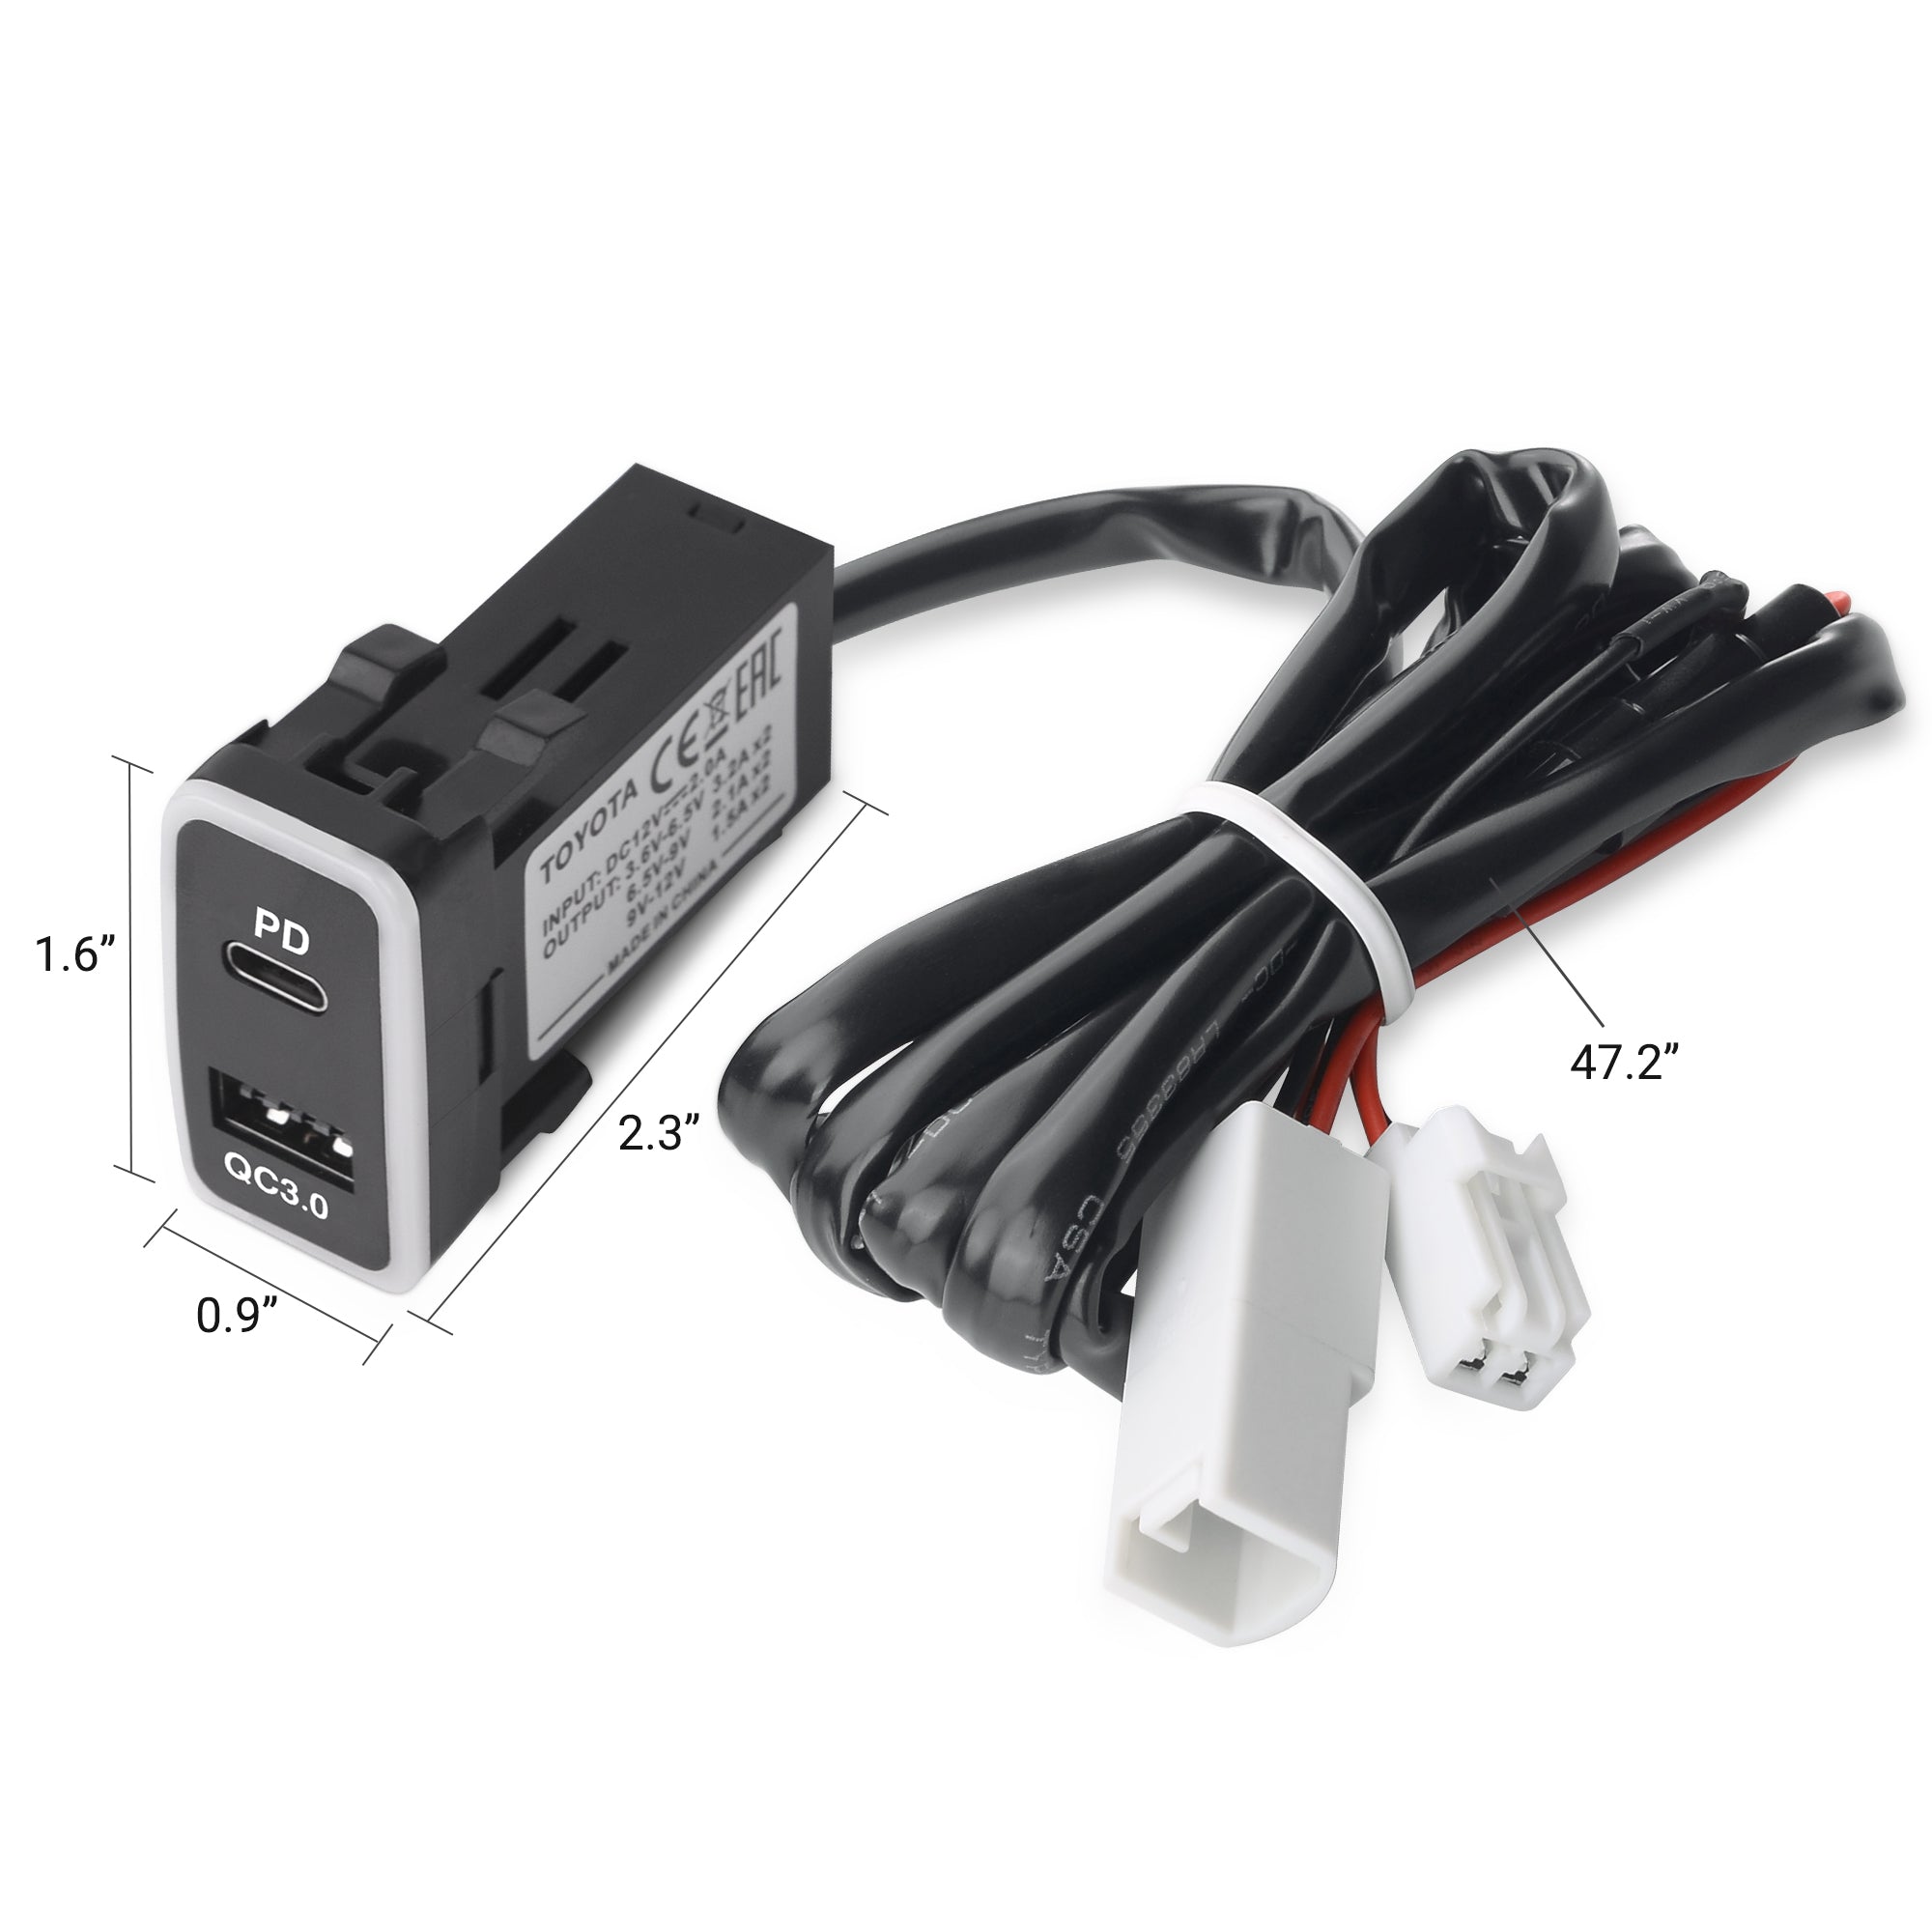 C2G Smart USB Car Charger - Car power adapter - 2.4 A (USB